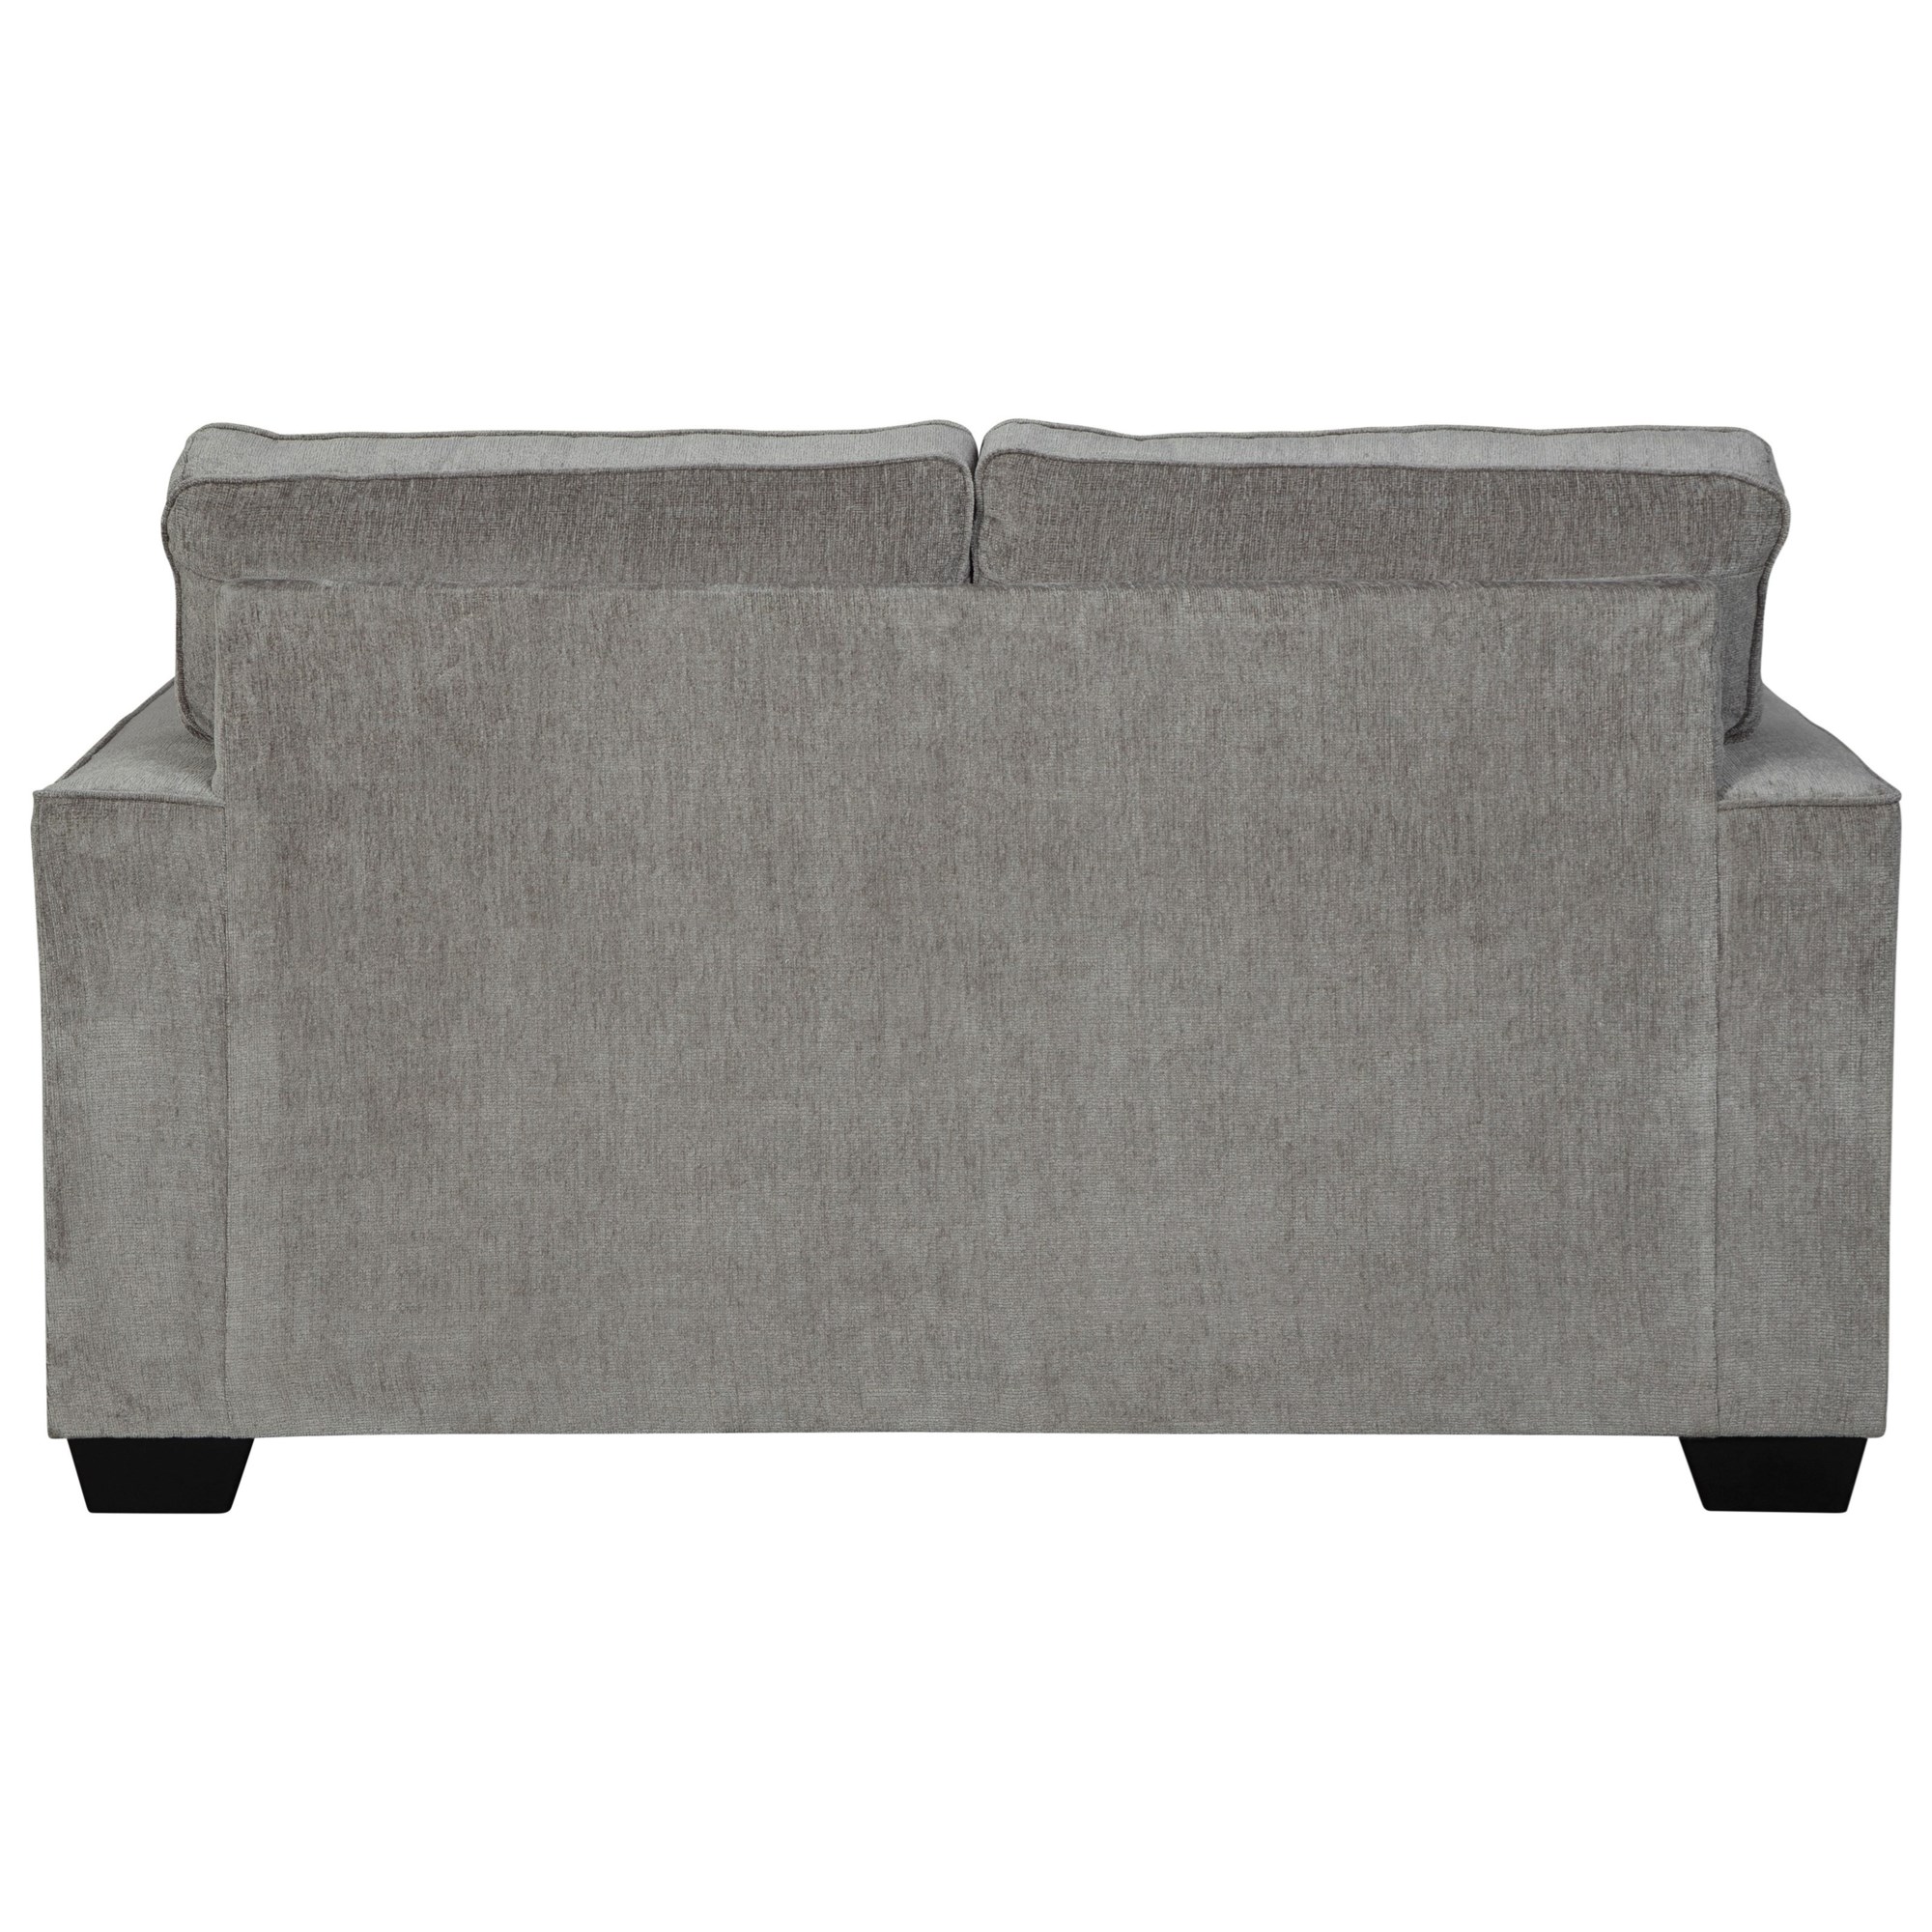 Signature Design 8721435 Loveseats Furniture | - | Loveseat Altari Ashley by Uph HomeWorld